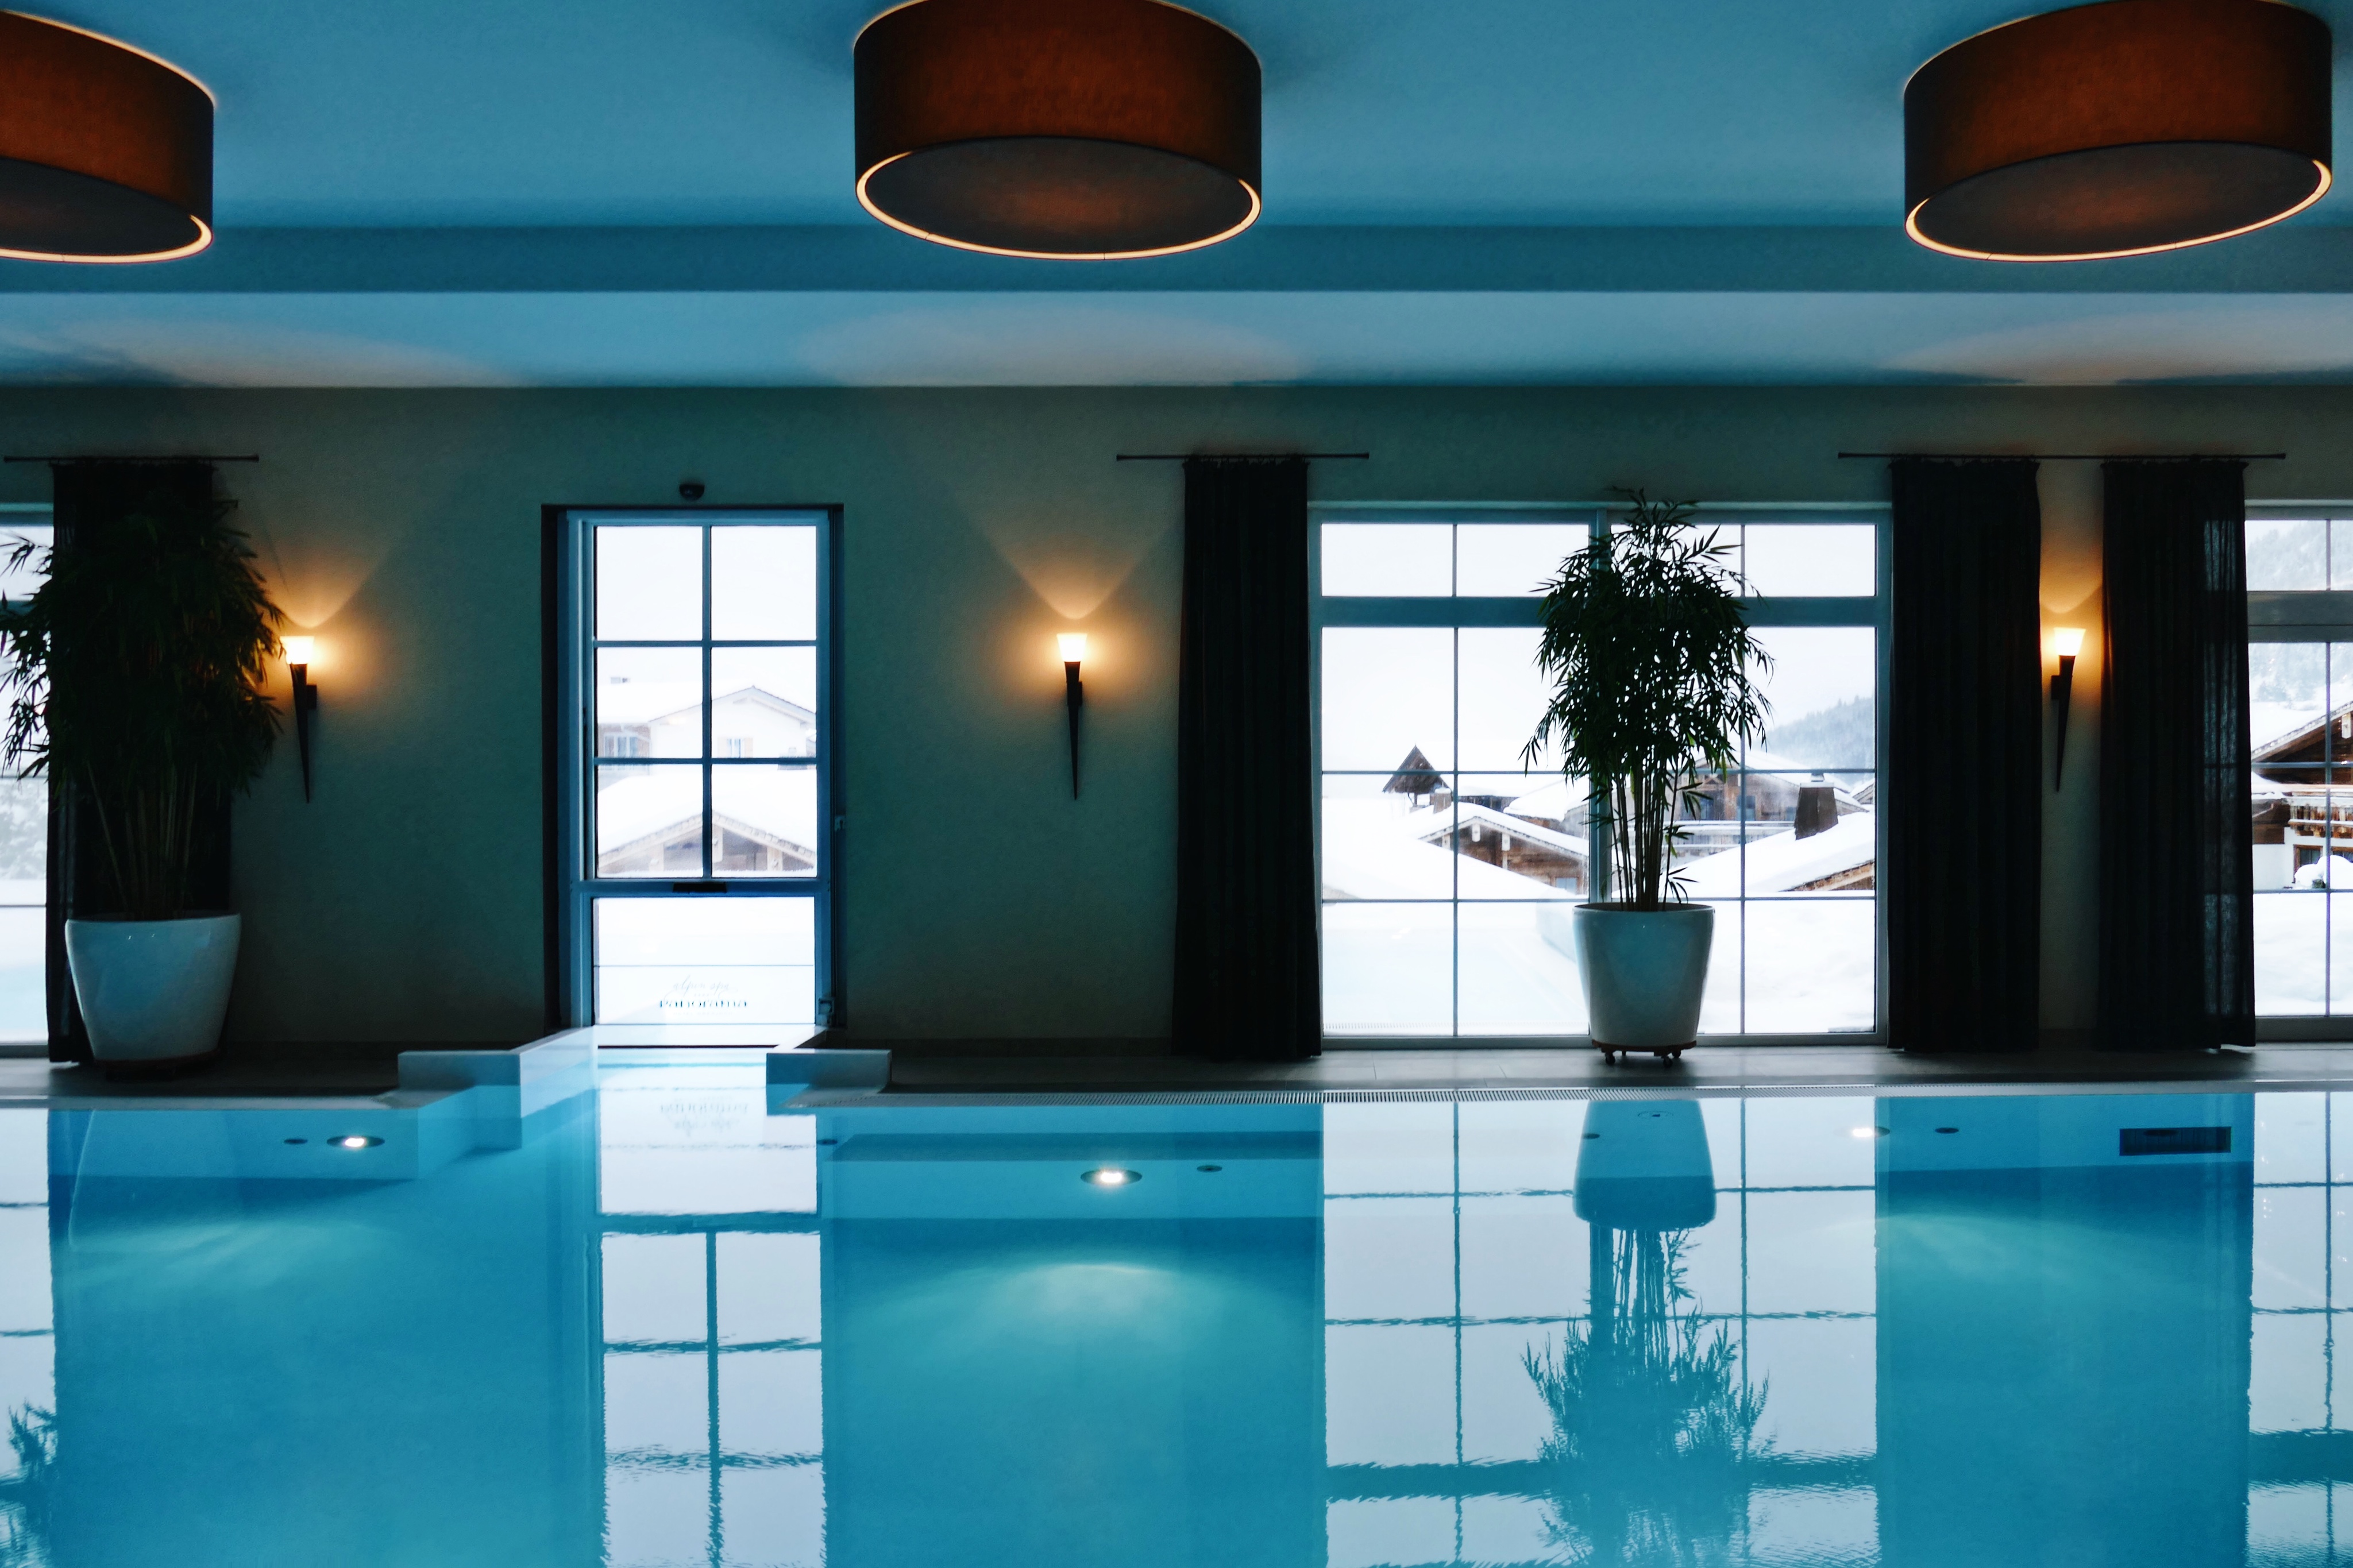 Winter Urlaub Kurztrip Wellness Hotel Hotel in den Bergen Pool Infinity pool Winter Sauna Blockhütte Pool Schnee drinnen Hotel